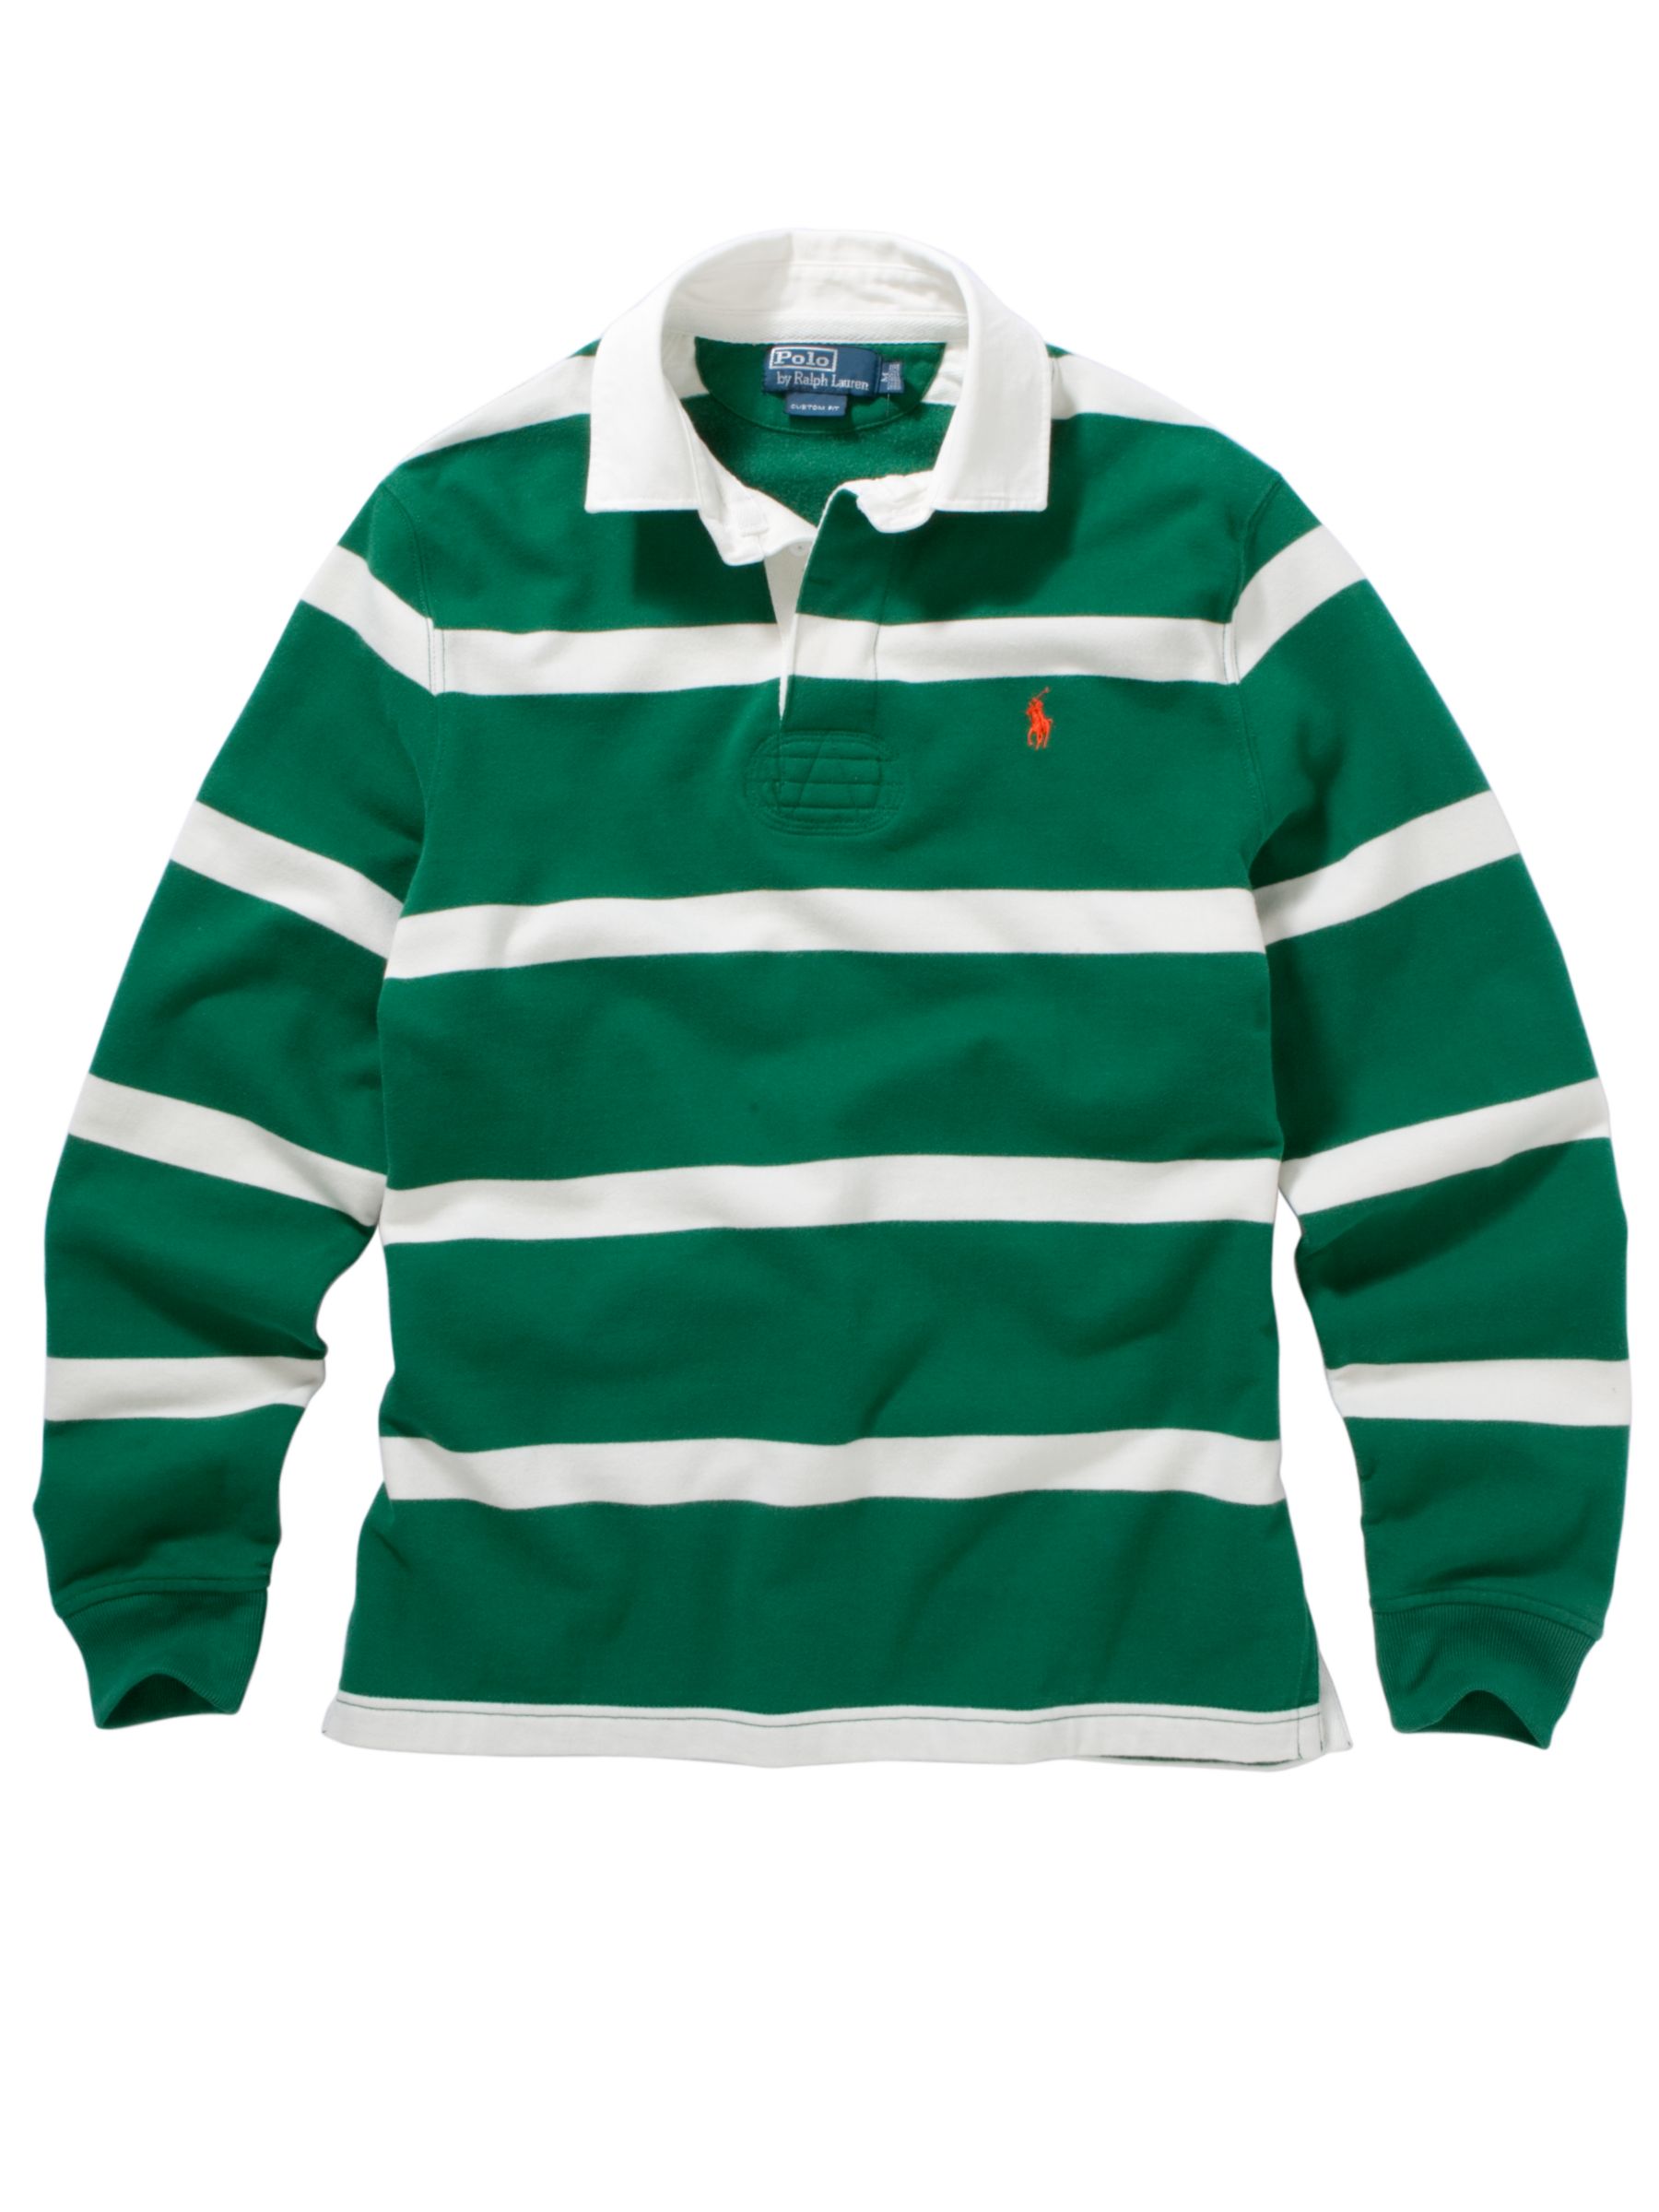 Polo Ralph Lauren Stripe Rugby Shirt, Green/White